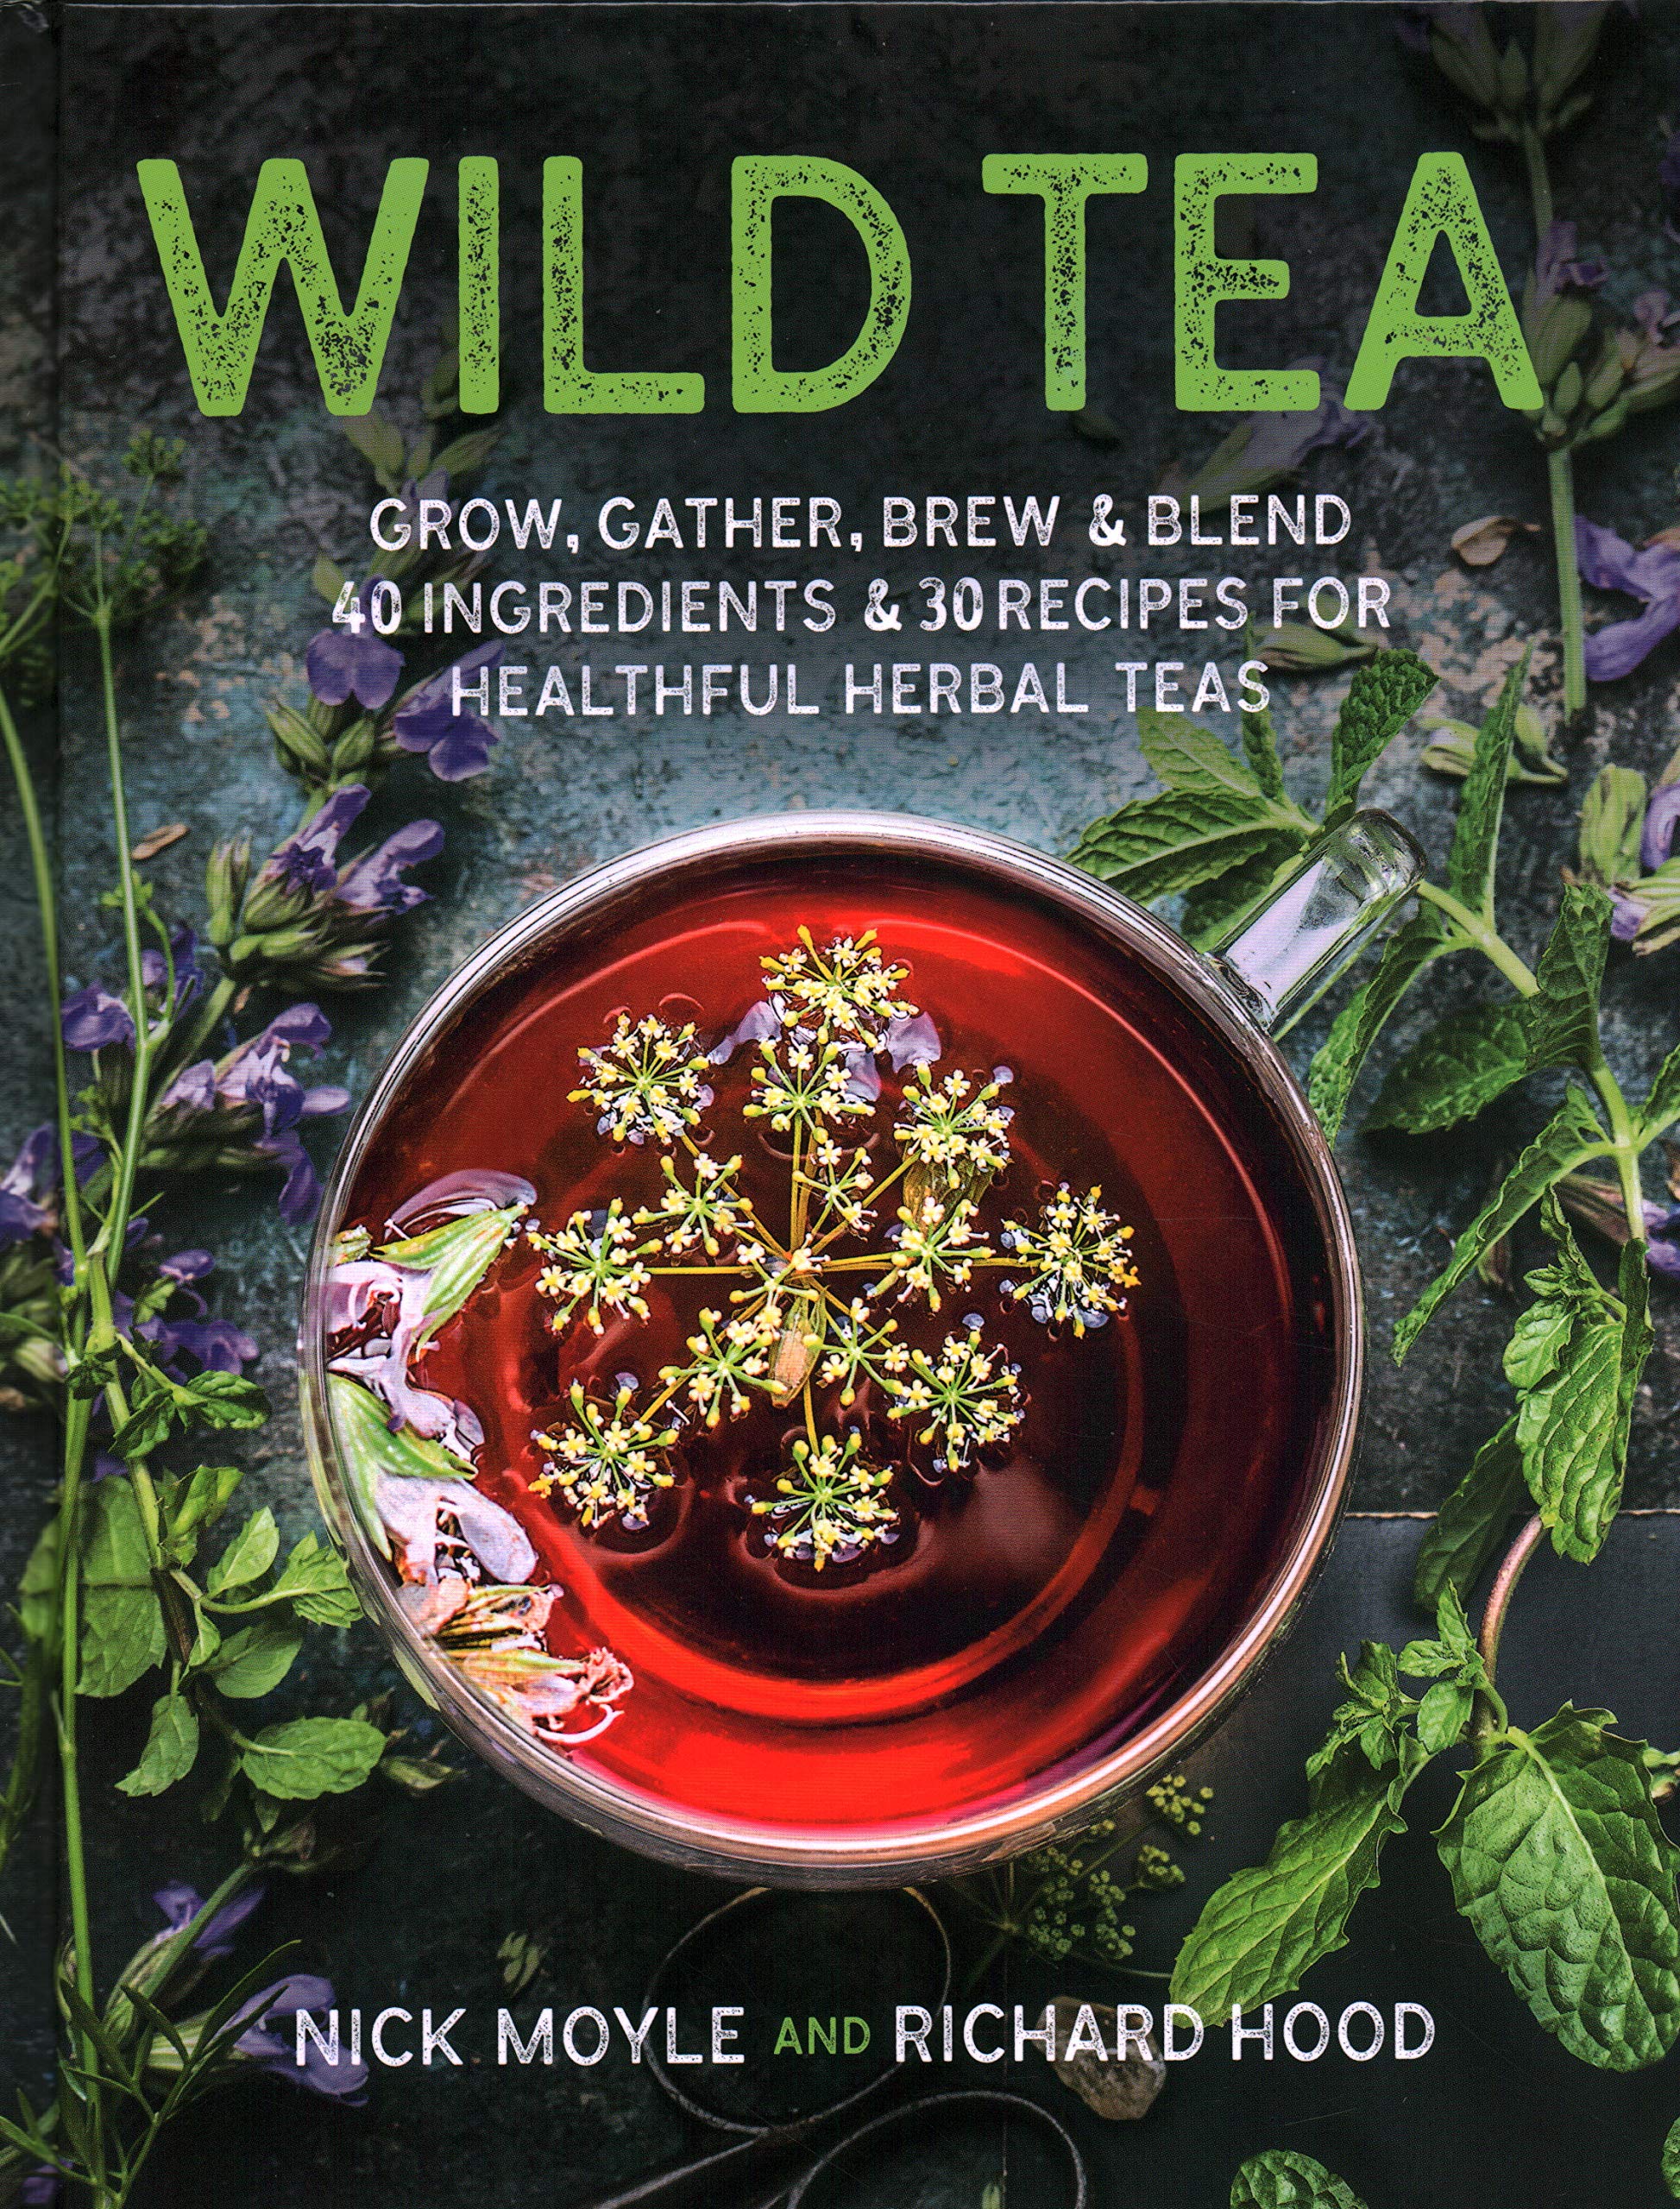 Wild Tea: Grow, Gather, Brew & Blend 40 Ingredients & 30 Recipes for Healthful Herbal Teas (Nick Moyle, Richard Hood)